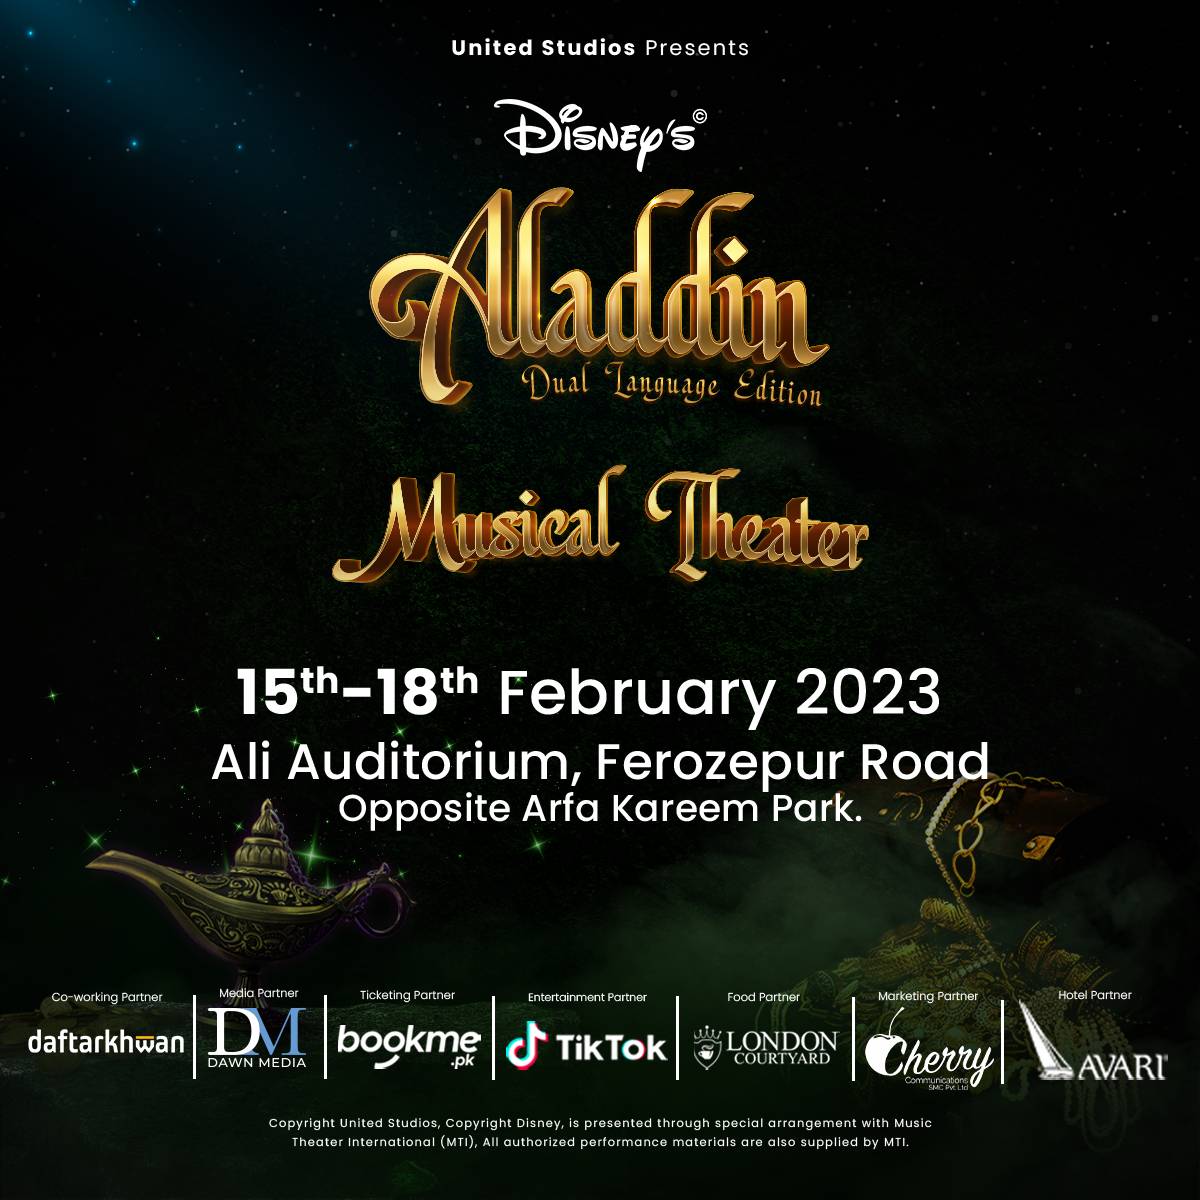 Disney's Aladdin Dual Language Edition